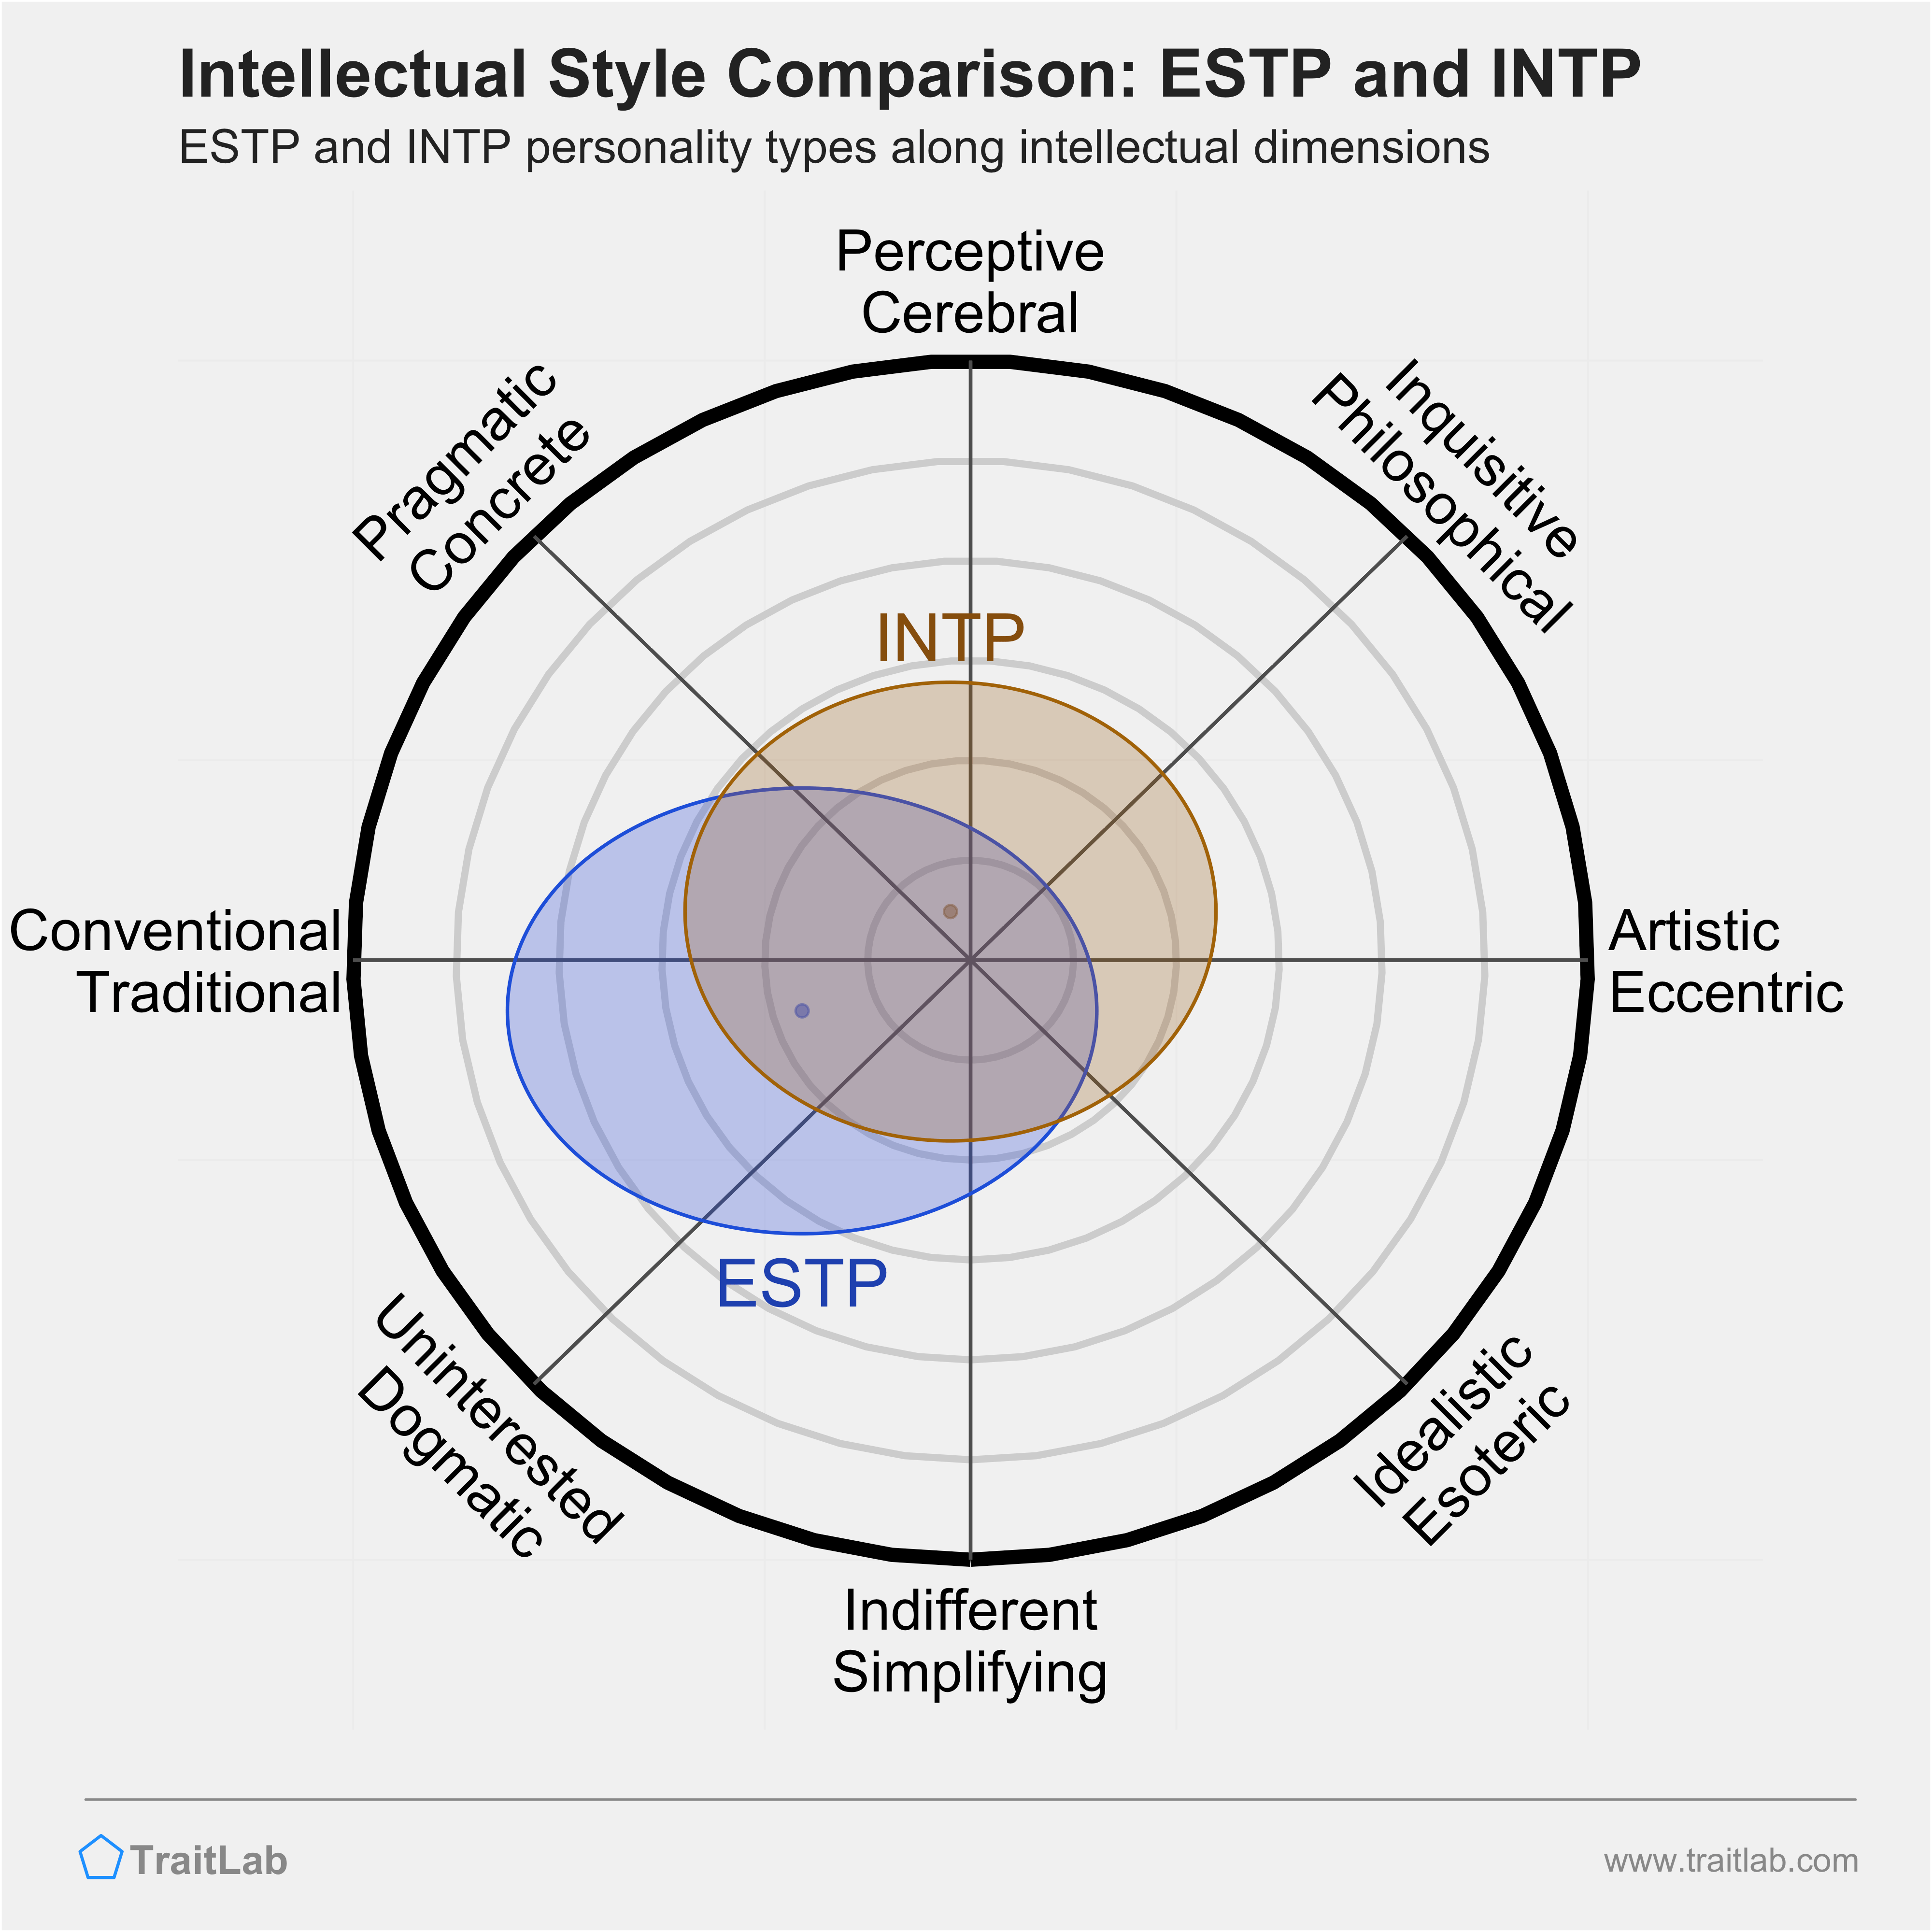 ESTP and INTP comparison across intellectual dimensions